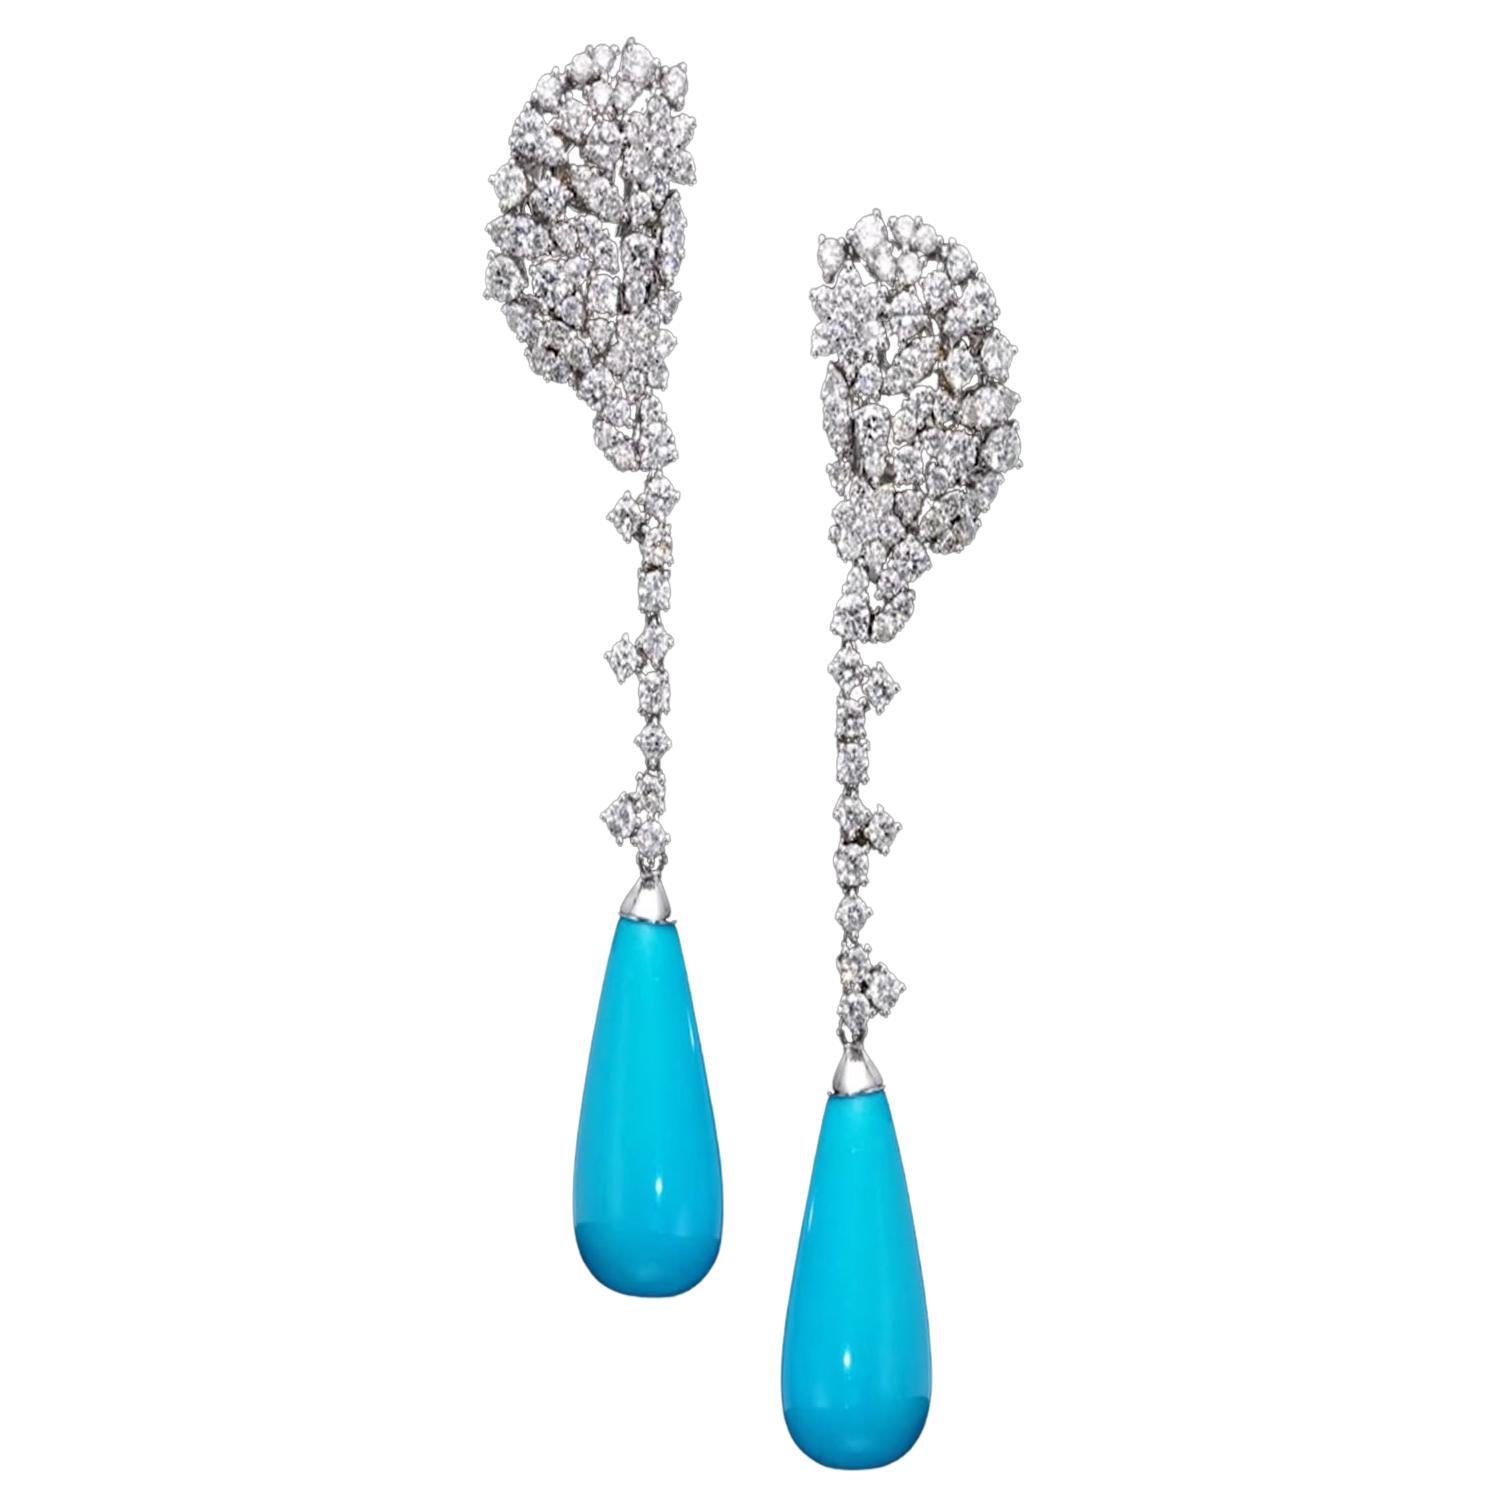 8.20 carat Turquoise Drop Earrings with 4.36 carat Natural Diamonds